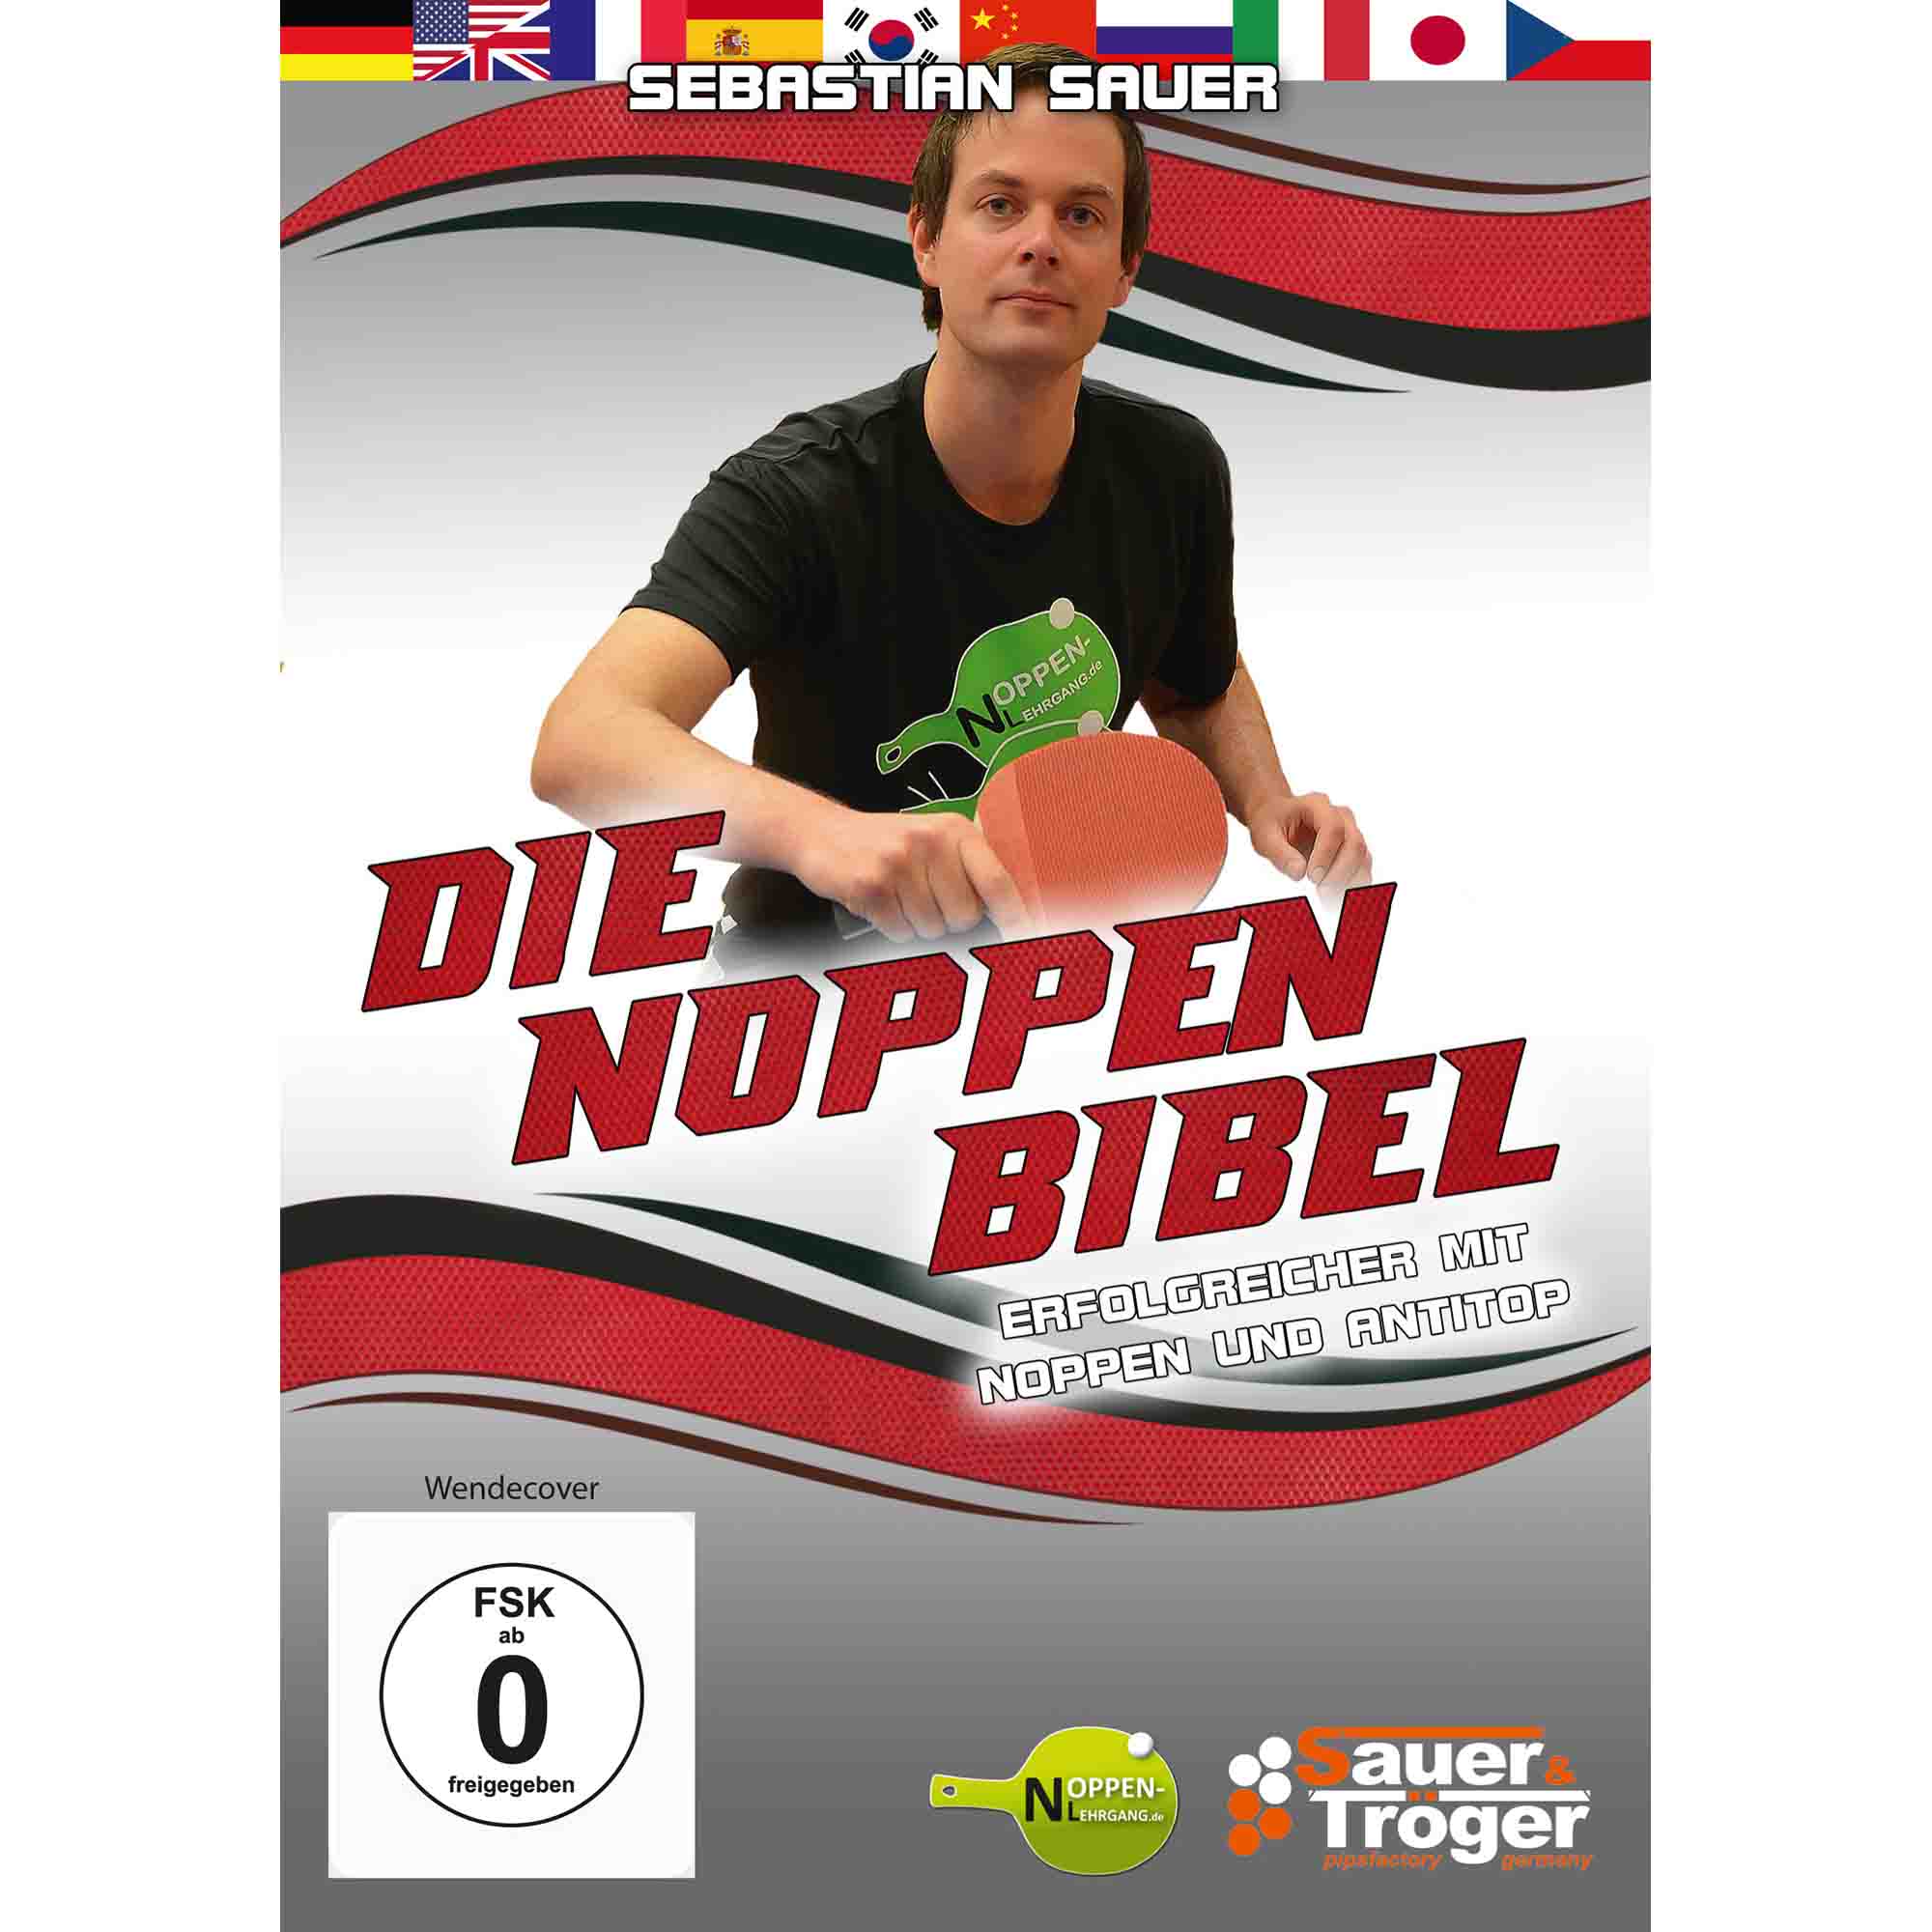 Sauer&Tröger DVD Noppenbibel